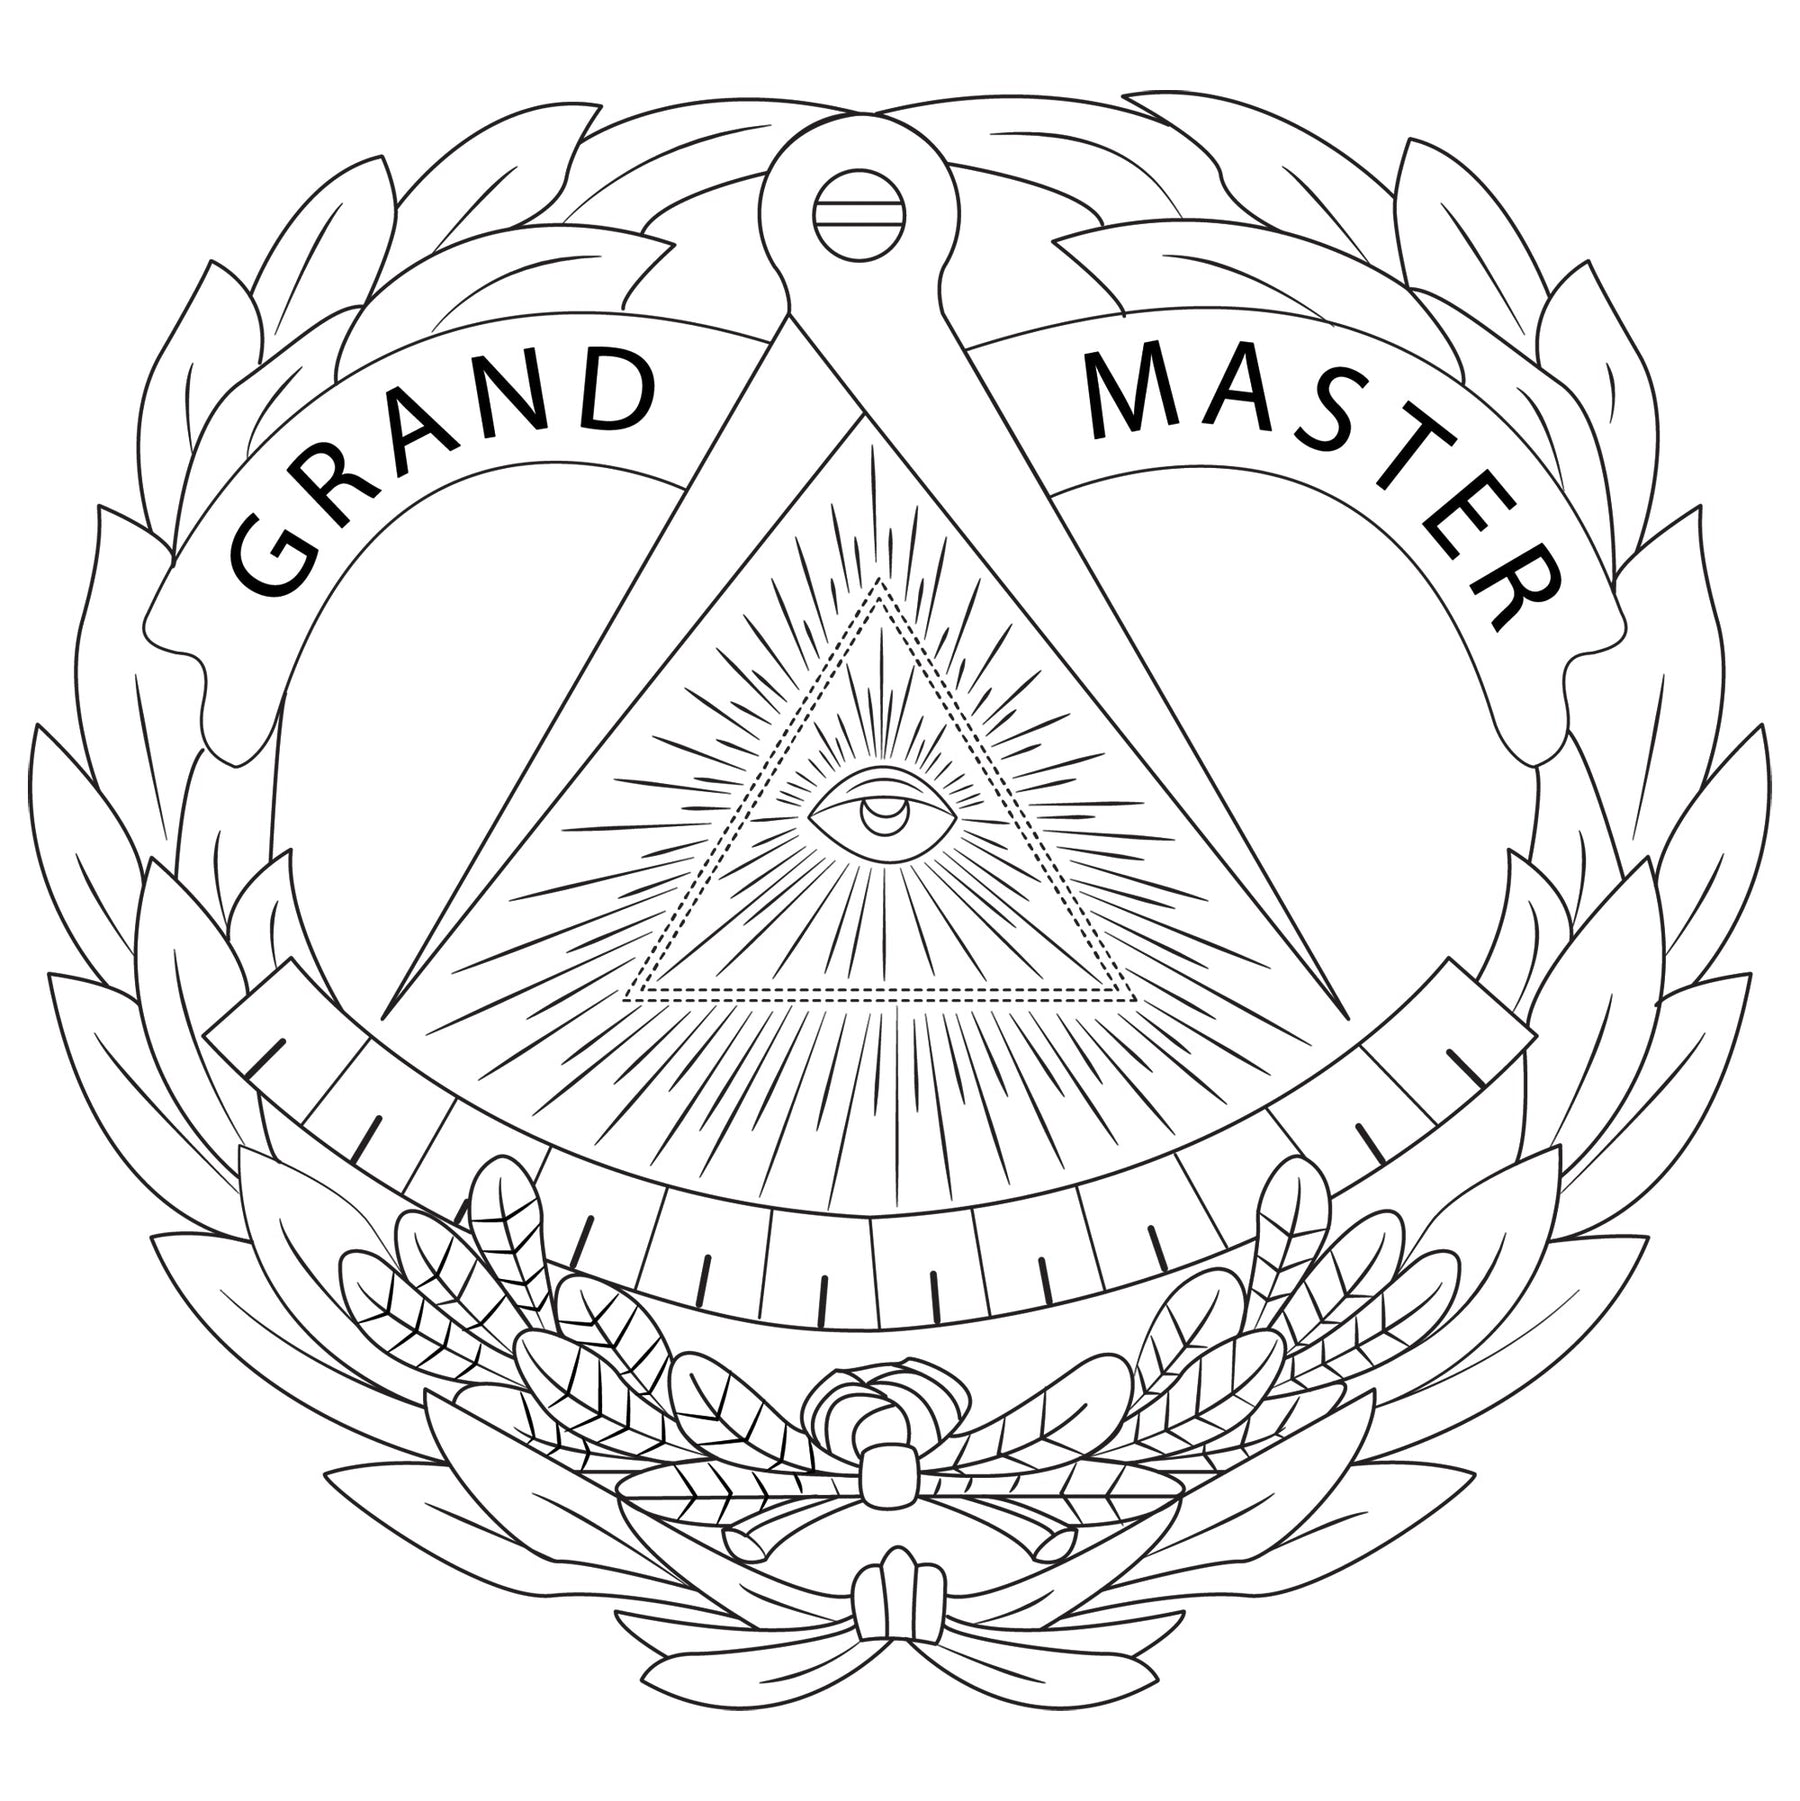 Grand Master Blue Lodge Champagne Flute - 2 Pieces Set - Bricks Masons